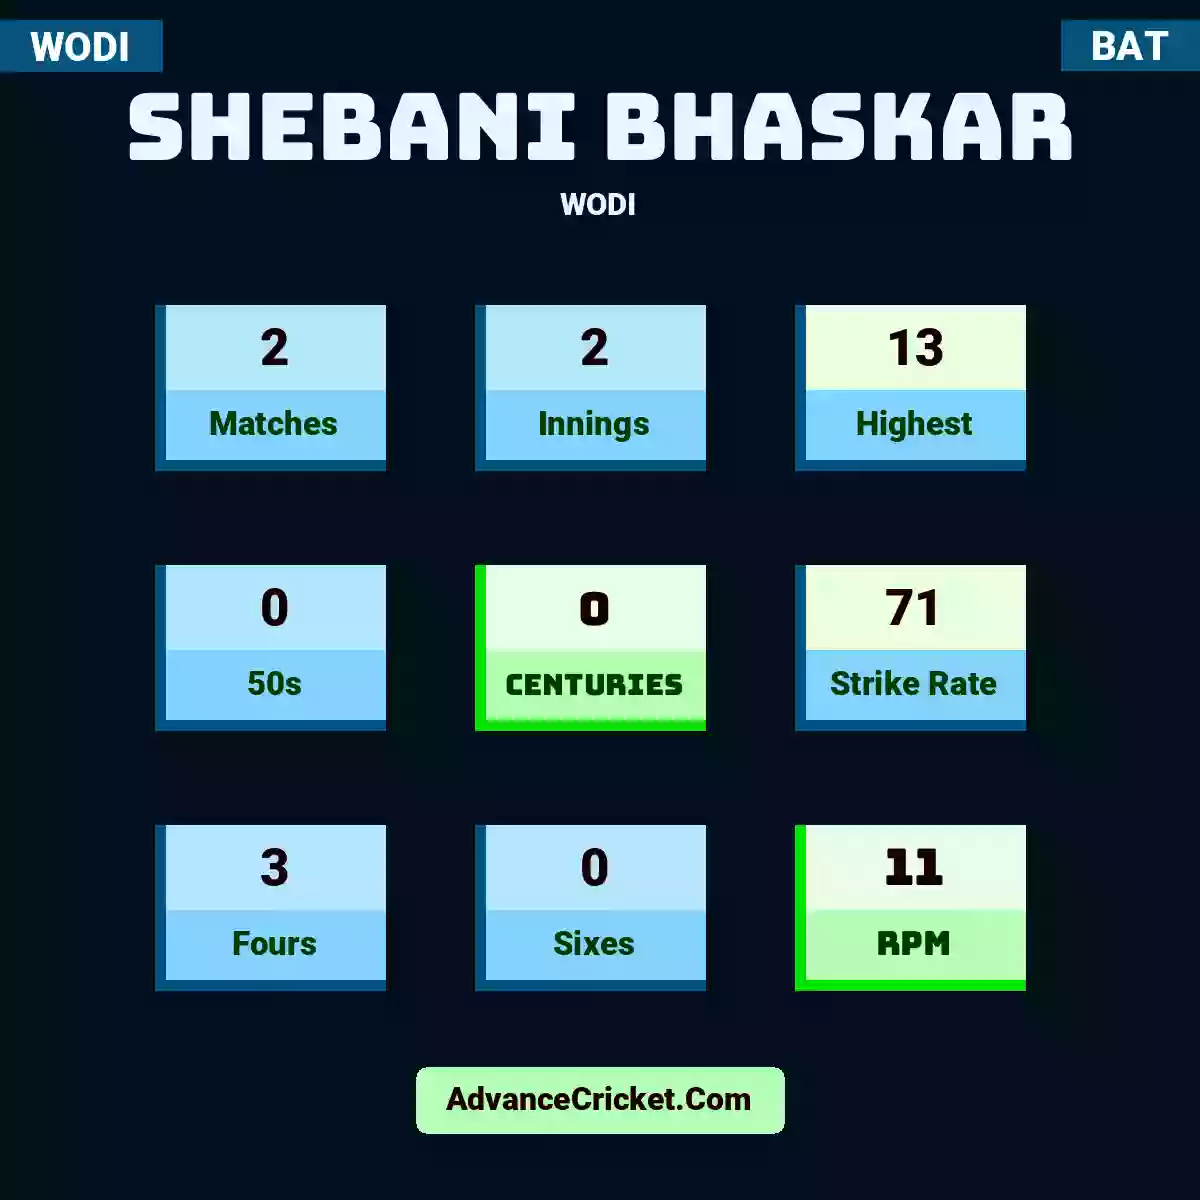 Shebani Bhaskar WODI , Shebani Bhaskar played 2 matches, scored 13 runs as highest, 0 half-centuries, and 0 centuries, with a strike rate of 71. S.Bhaskar hit 3 fours and 0 sixes, with an RPM of 11.